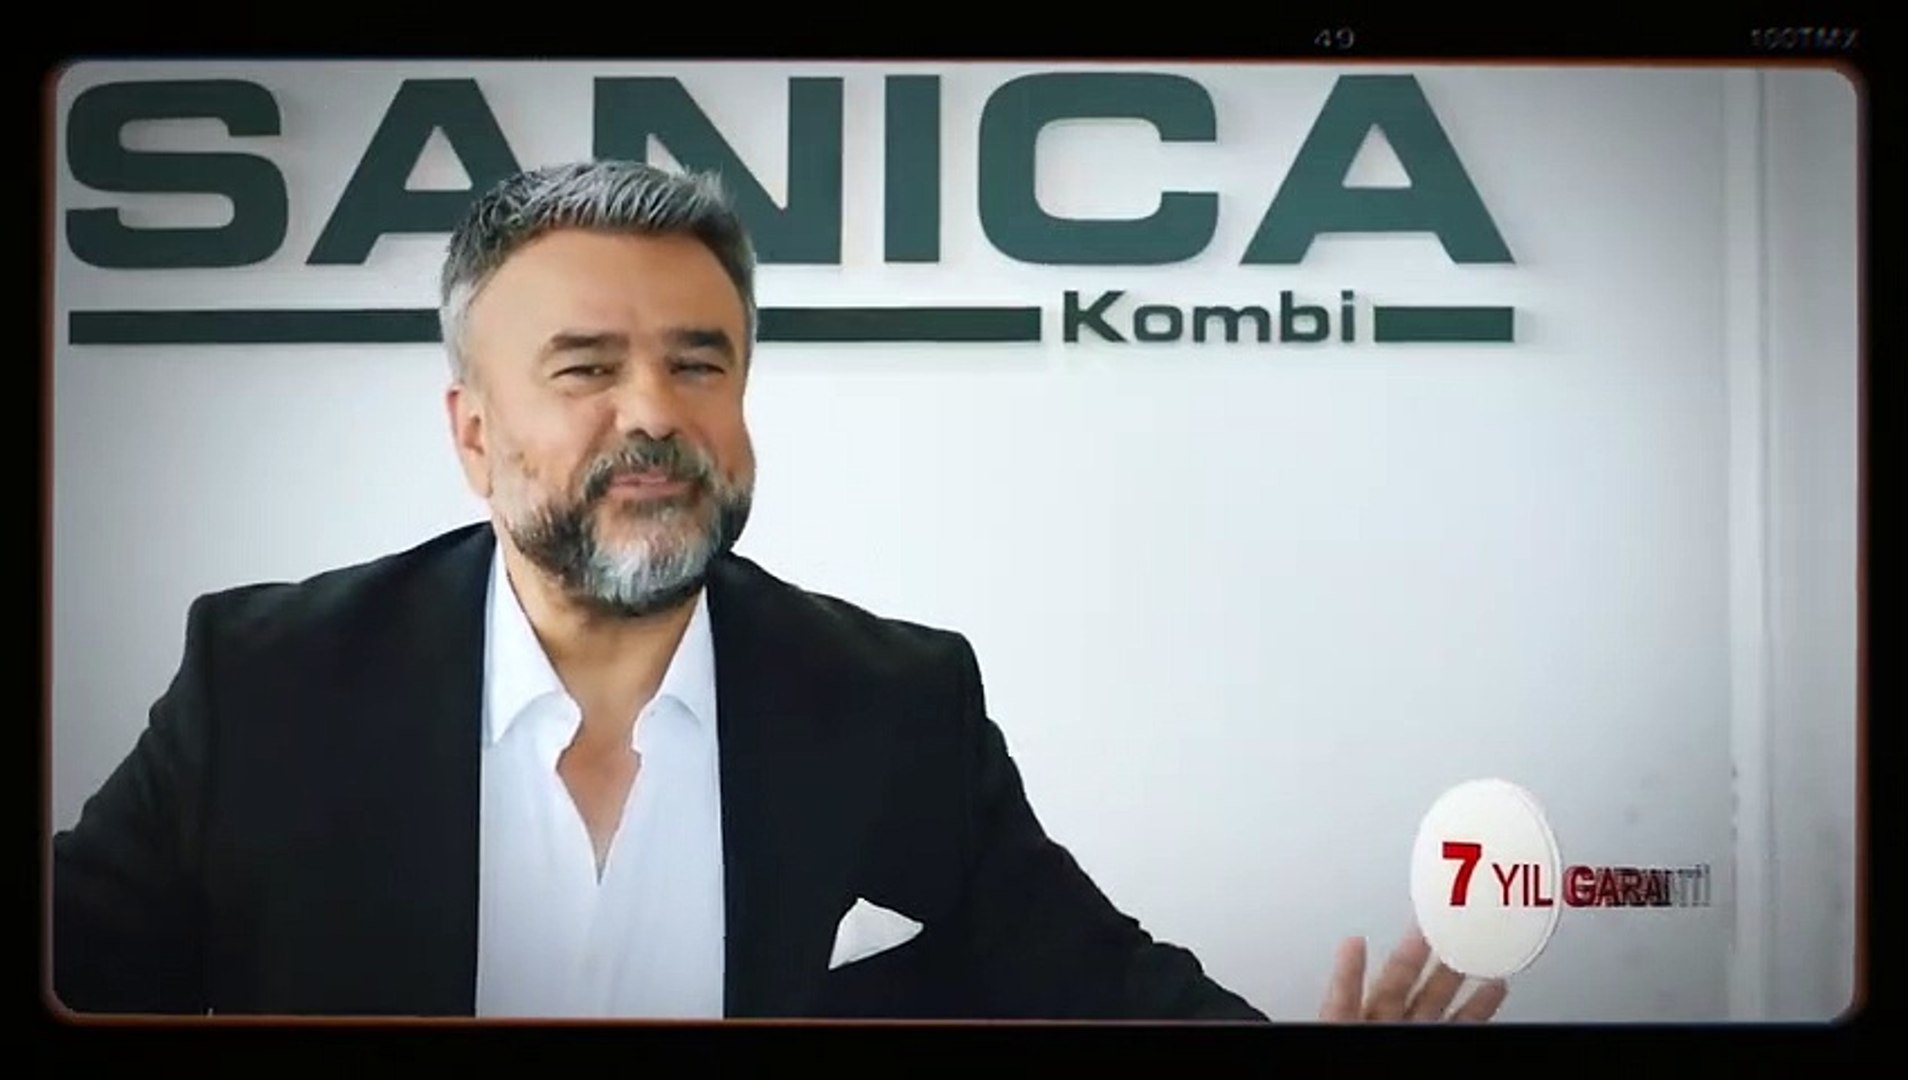 Sanica Kombi Bülent Serttaş Reklamı - Dailymotion Video